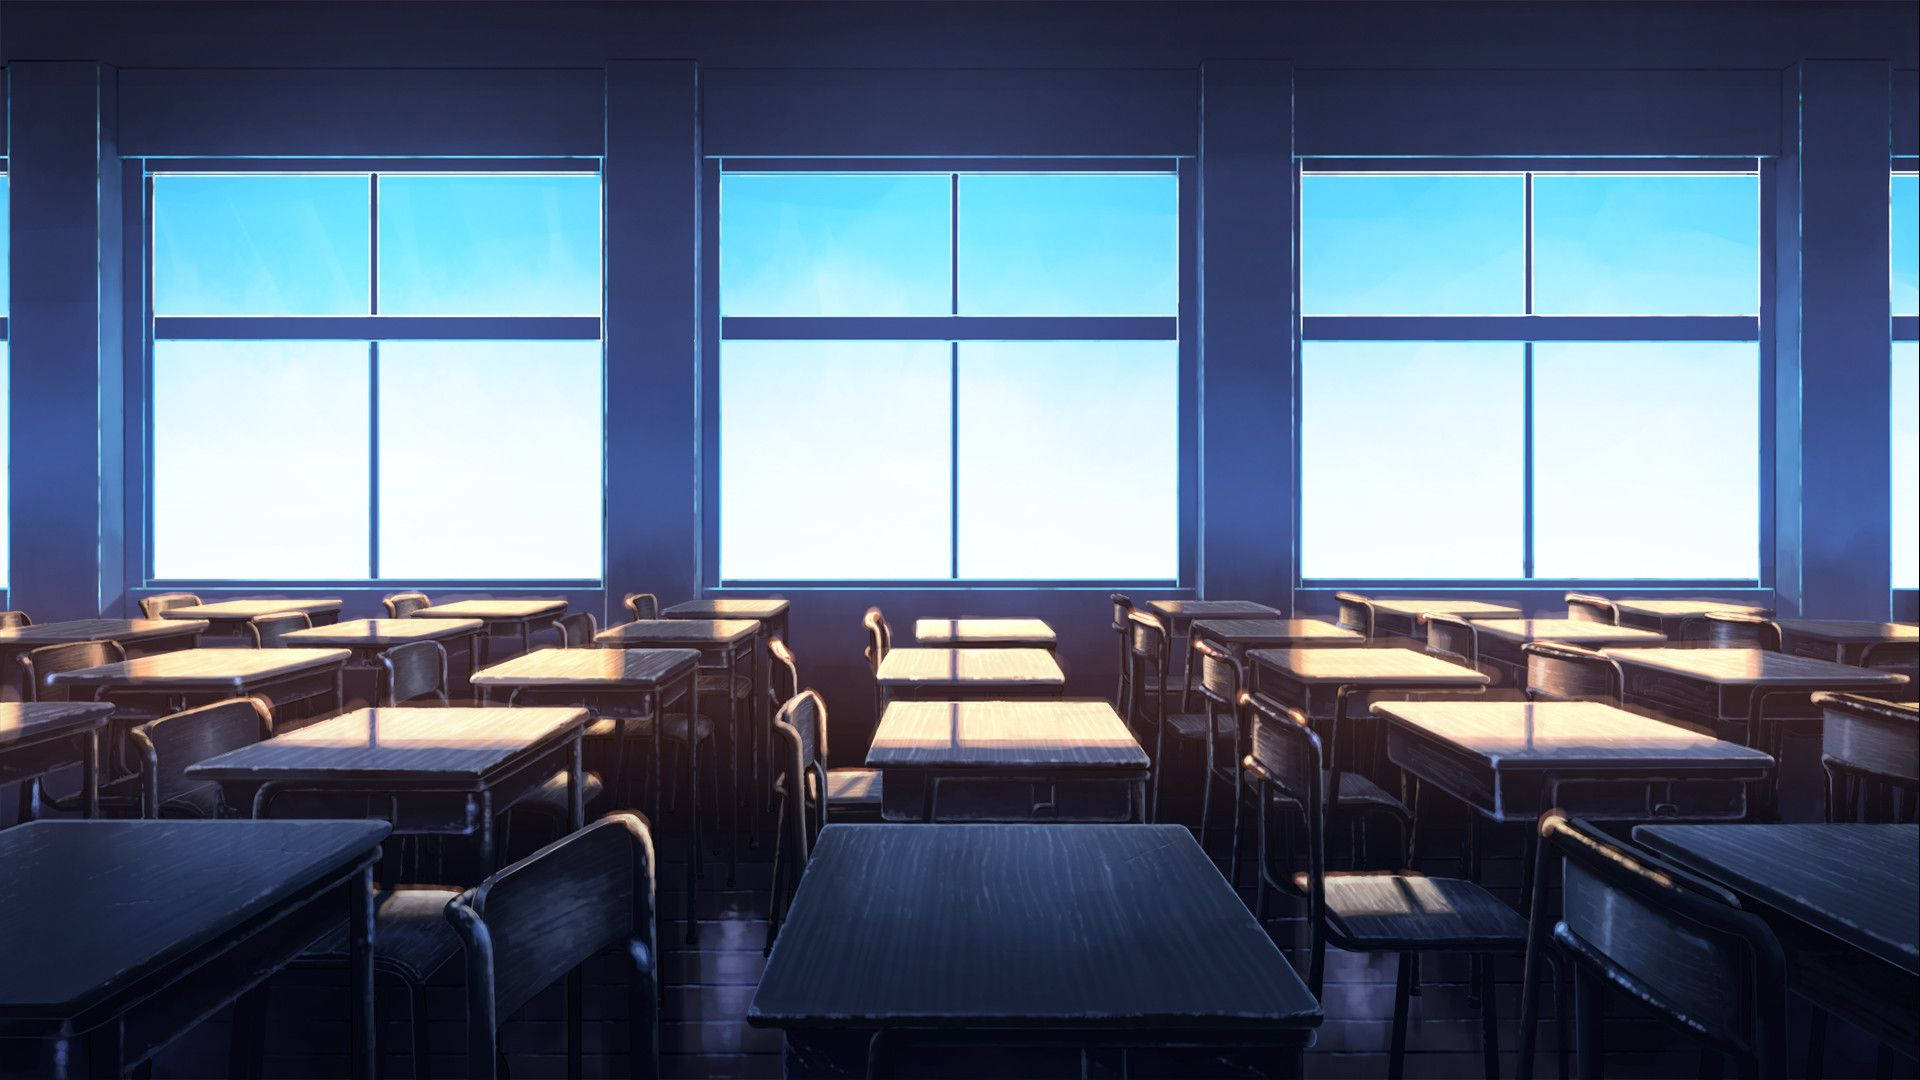 Anime School Scenery Classroom With Window View